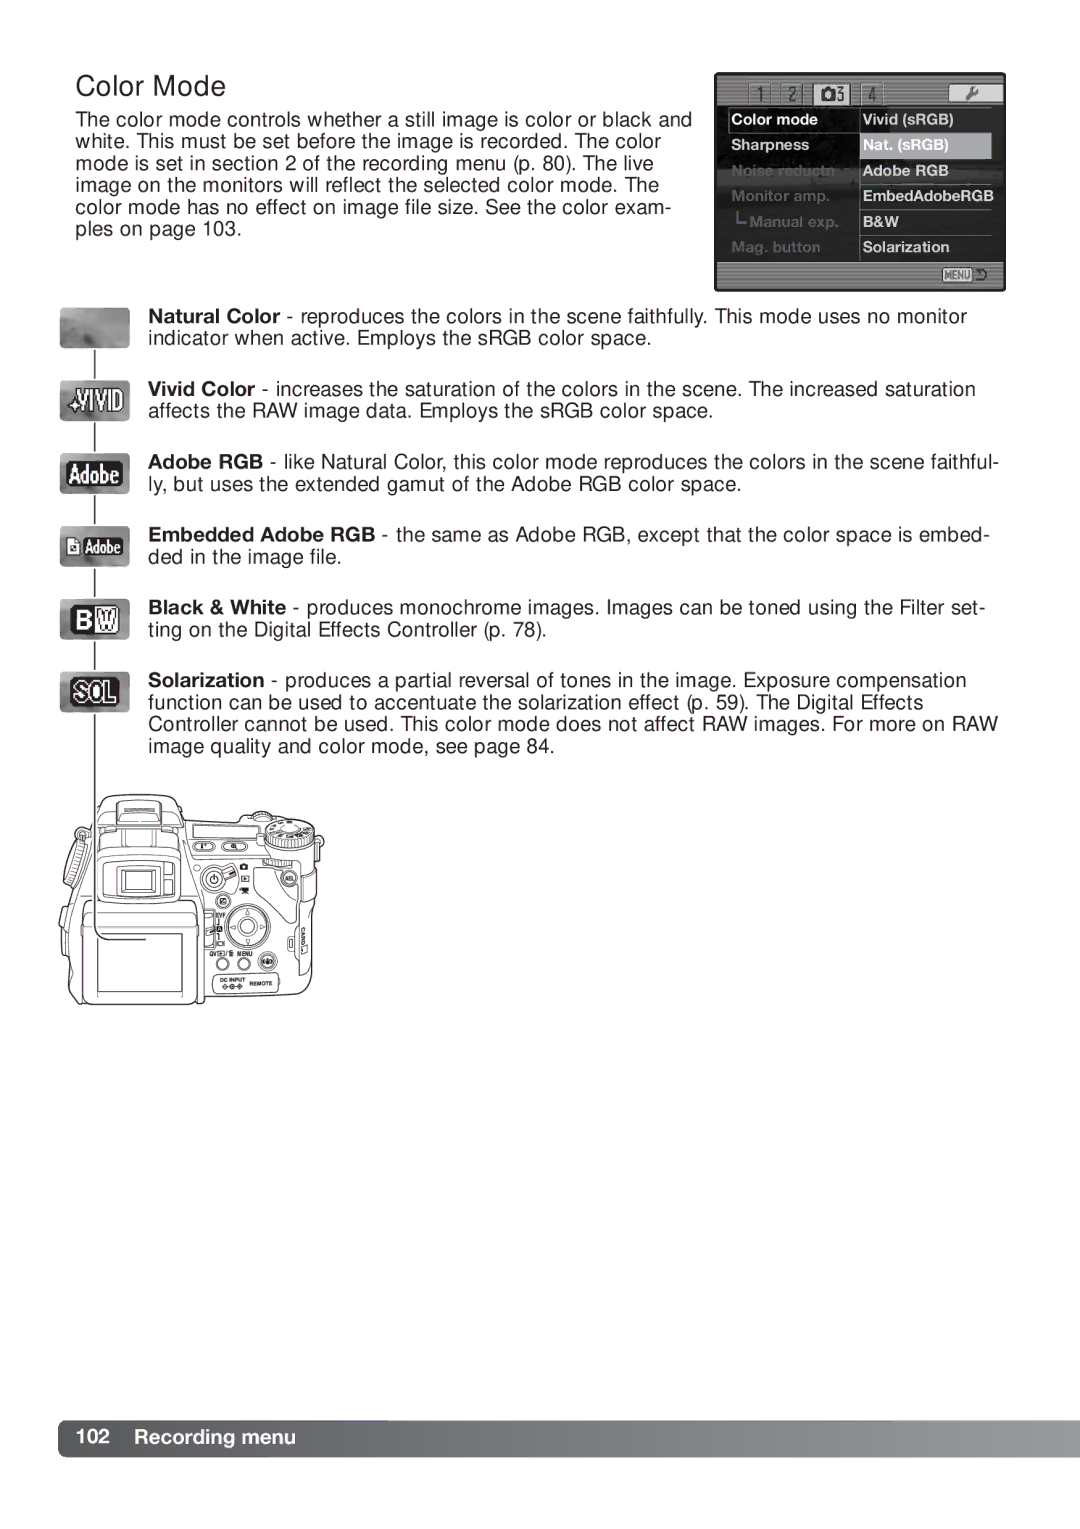 Konica Minolta DiMAGE_A2 instruction manual Color Mode 